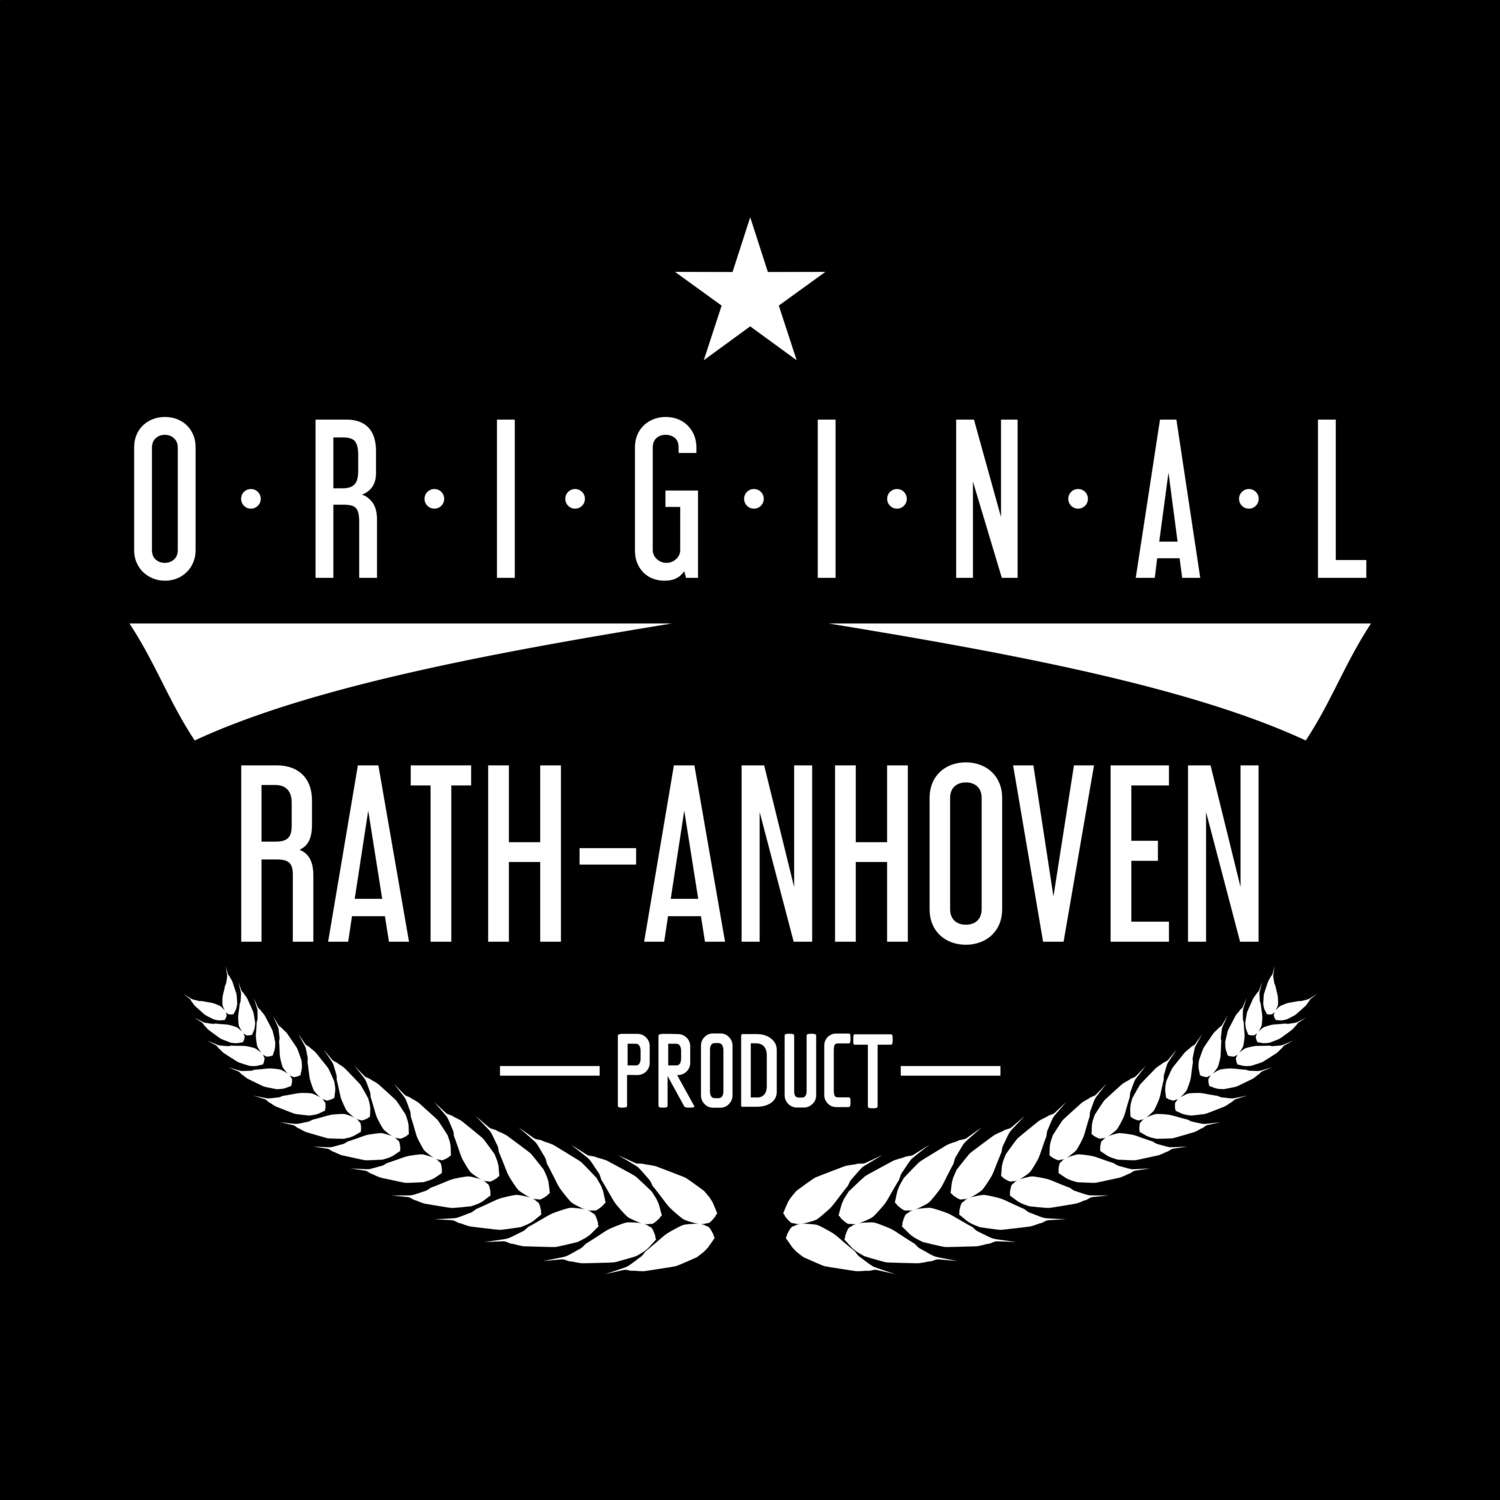 Rath-Anhoven T-Shirt »Original Product«